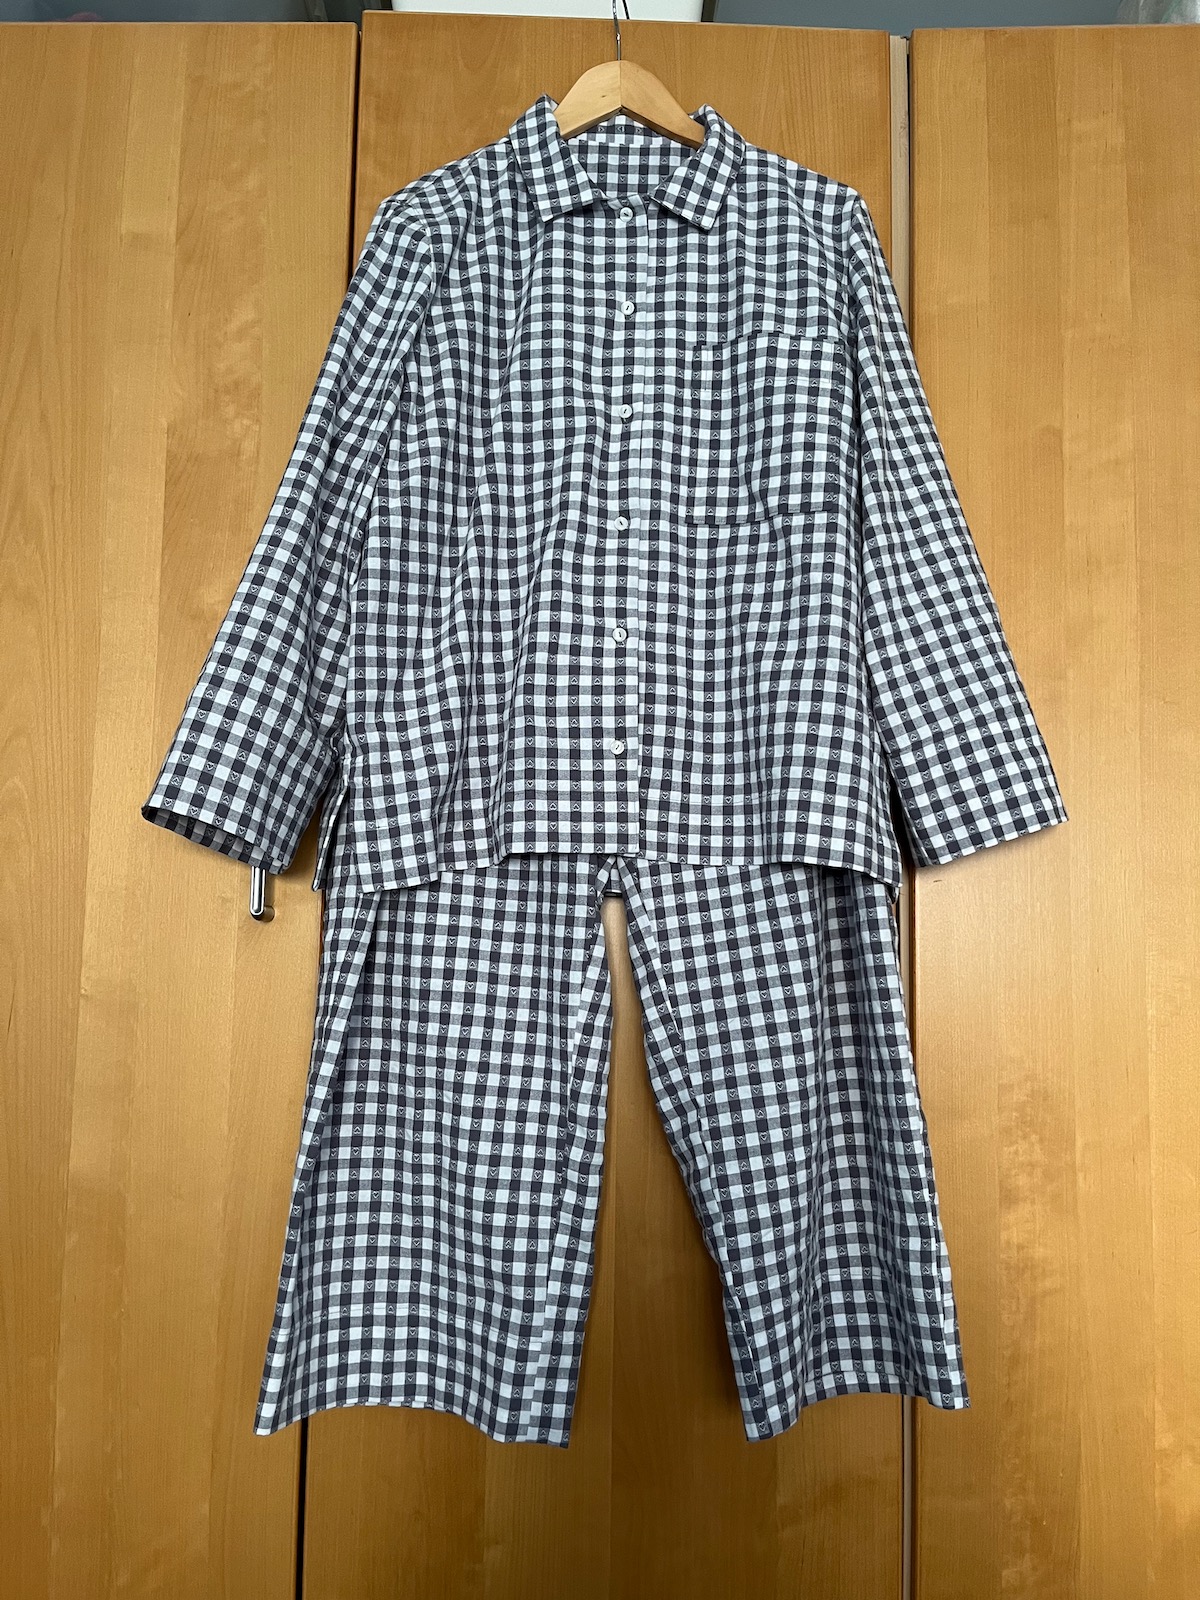 Grey and white checked pyjama set on a hanger